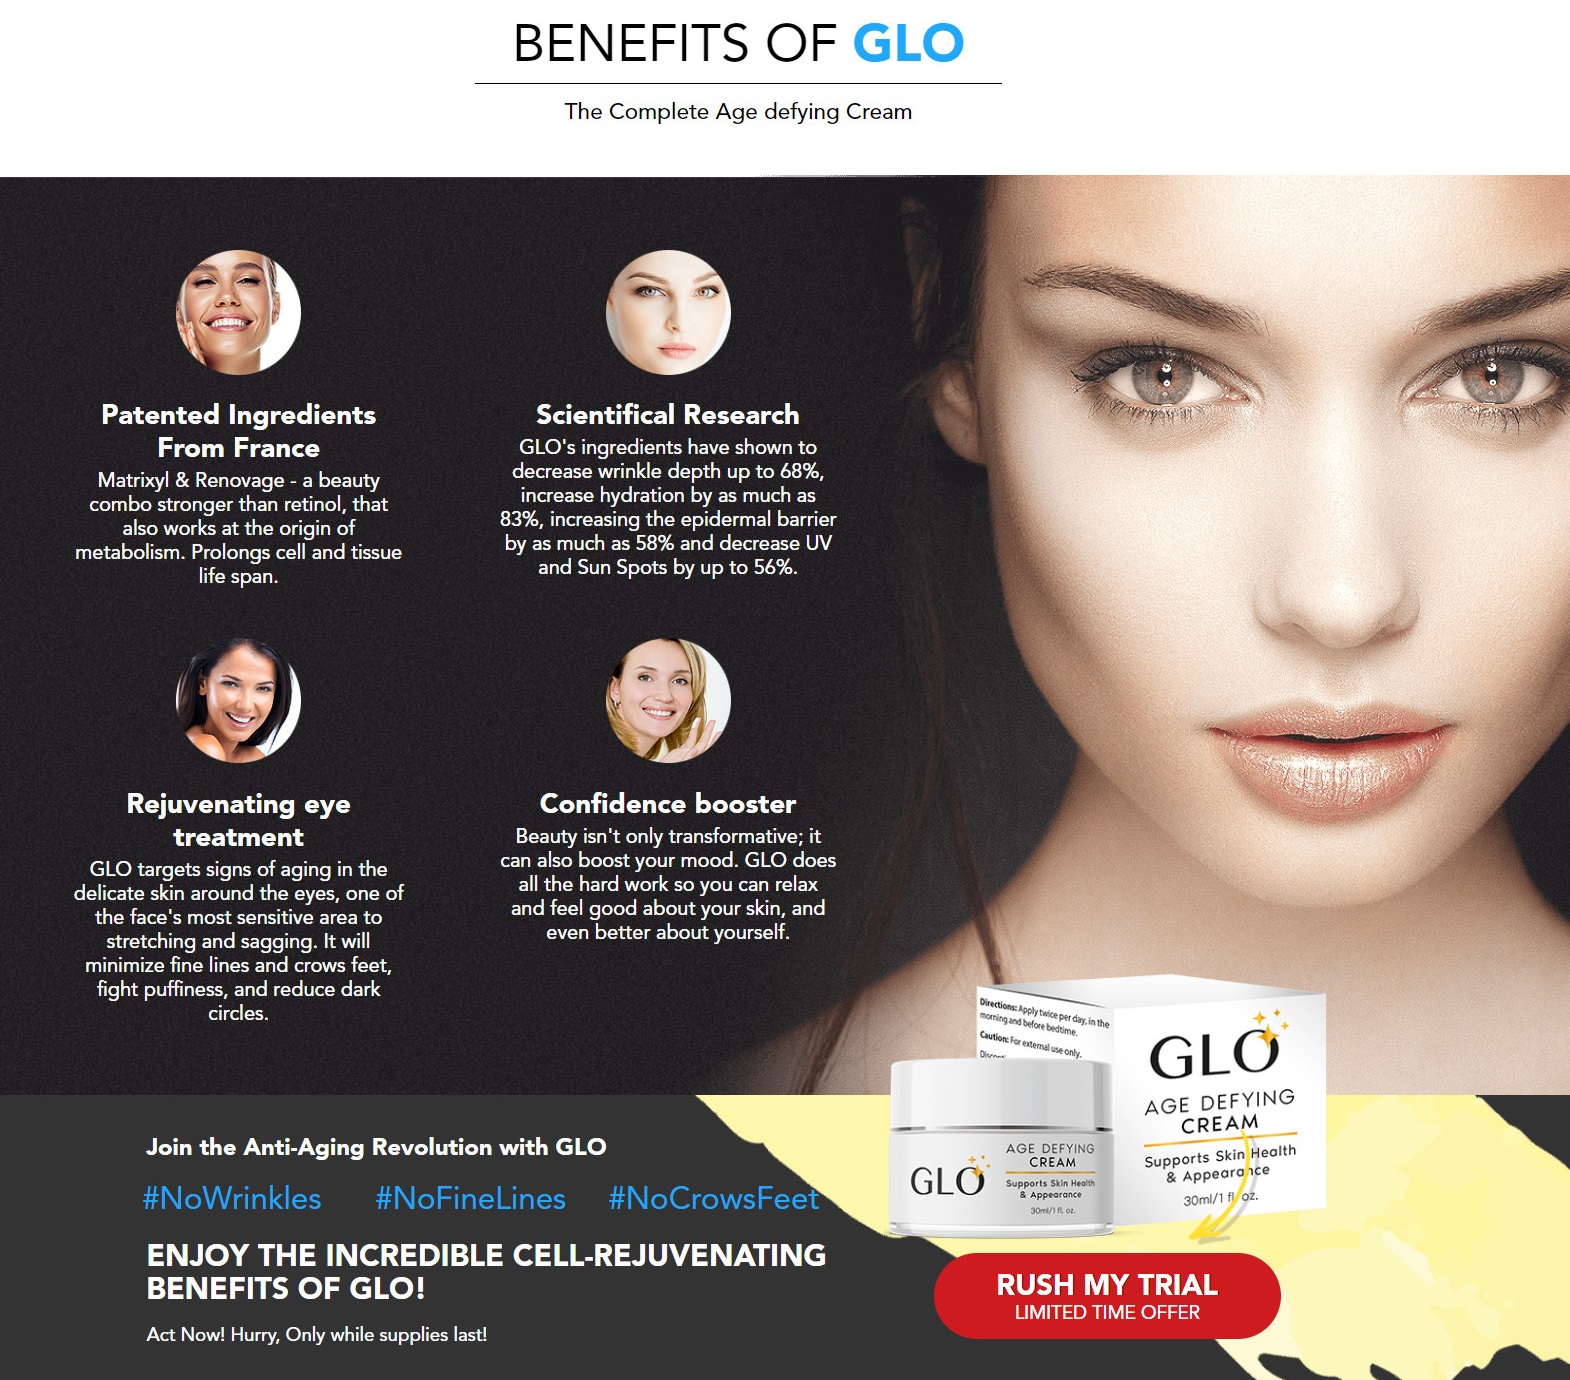 Glo Anti Aging Cream Benefits.jpg